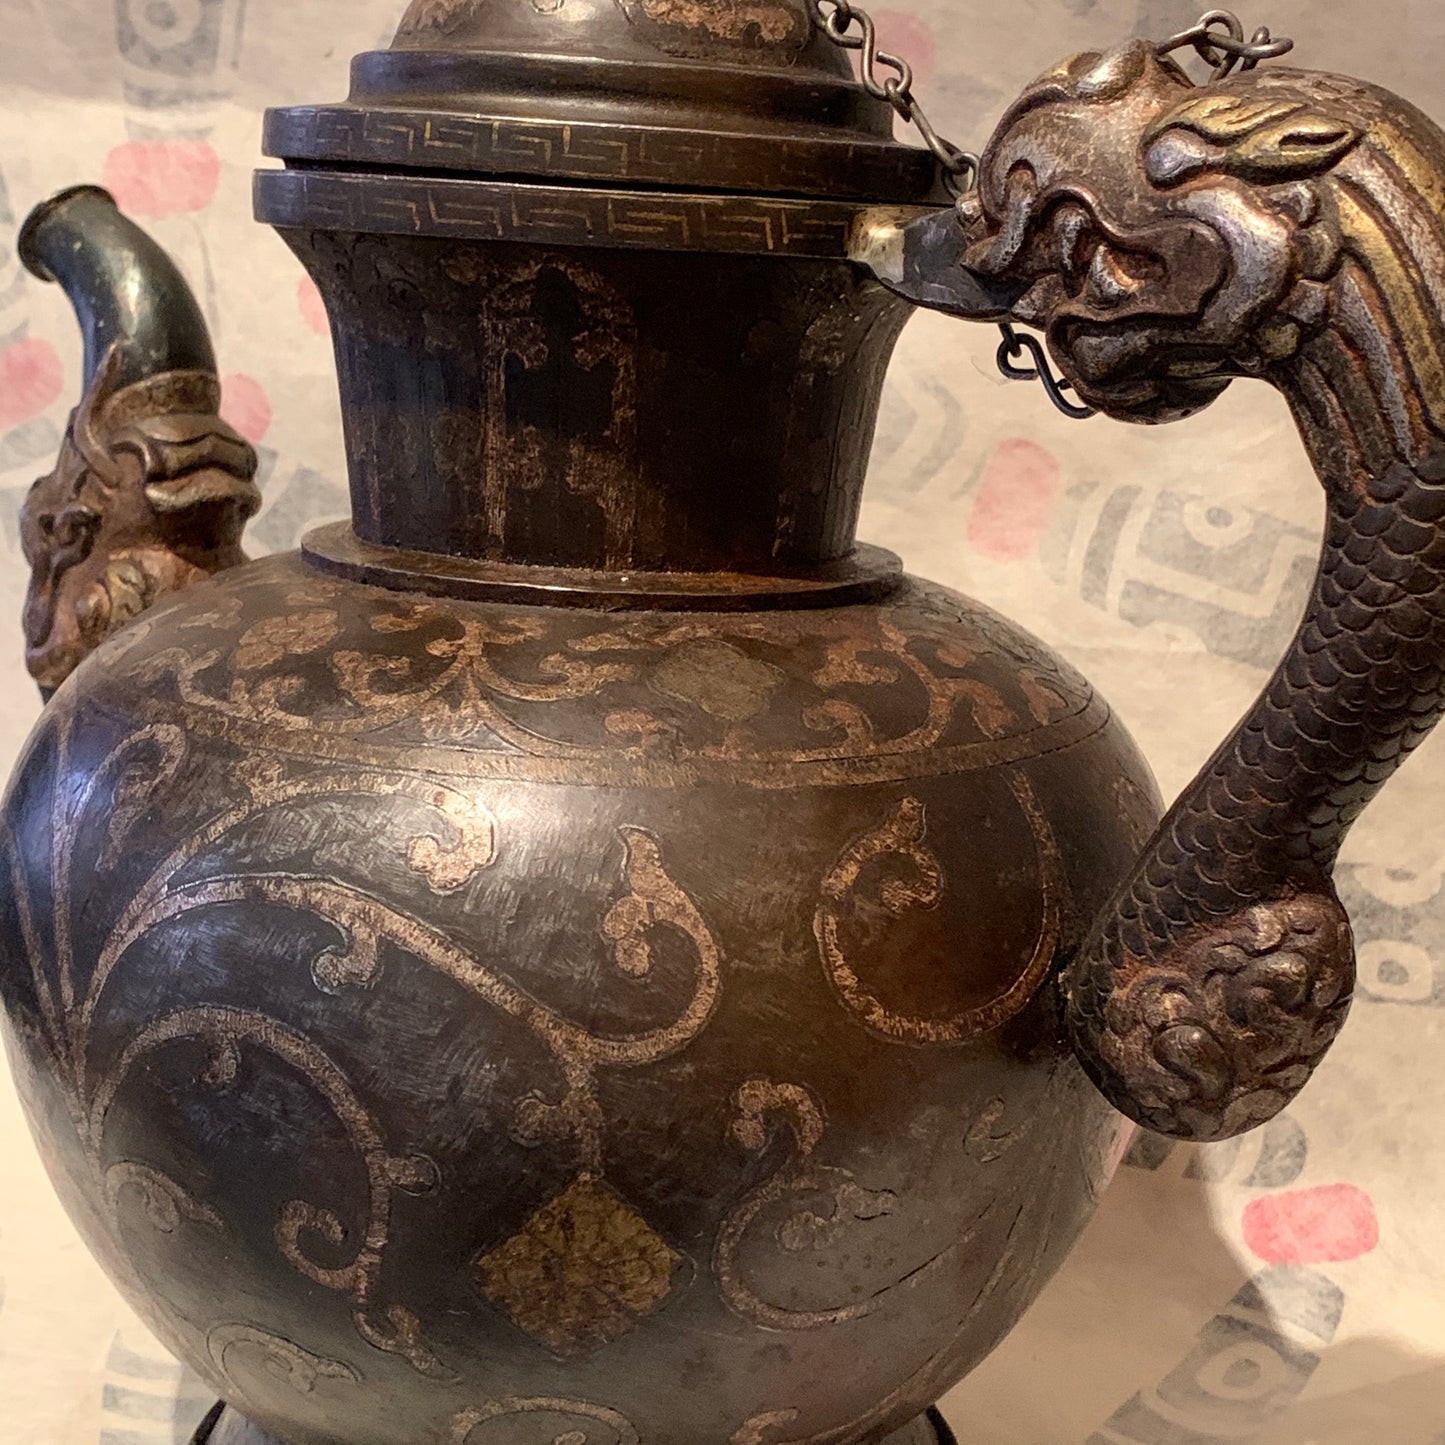 An antique Tibetan iron and silver teapot